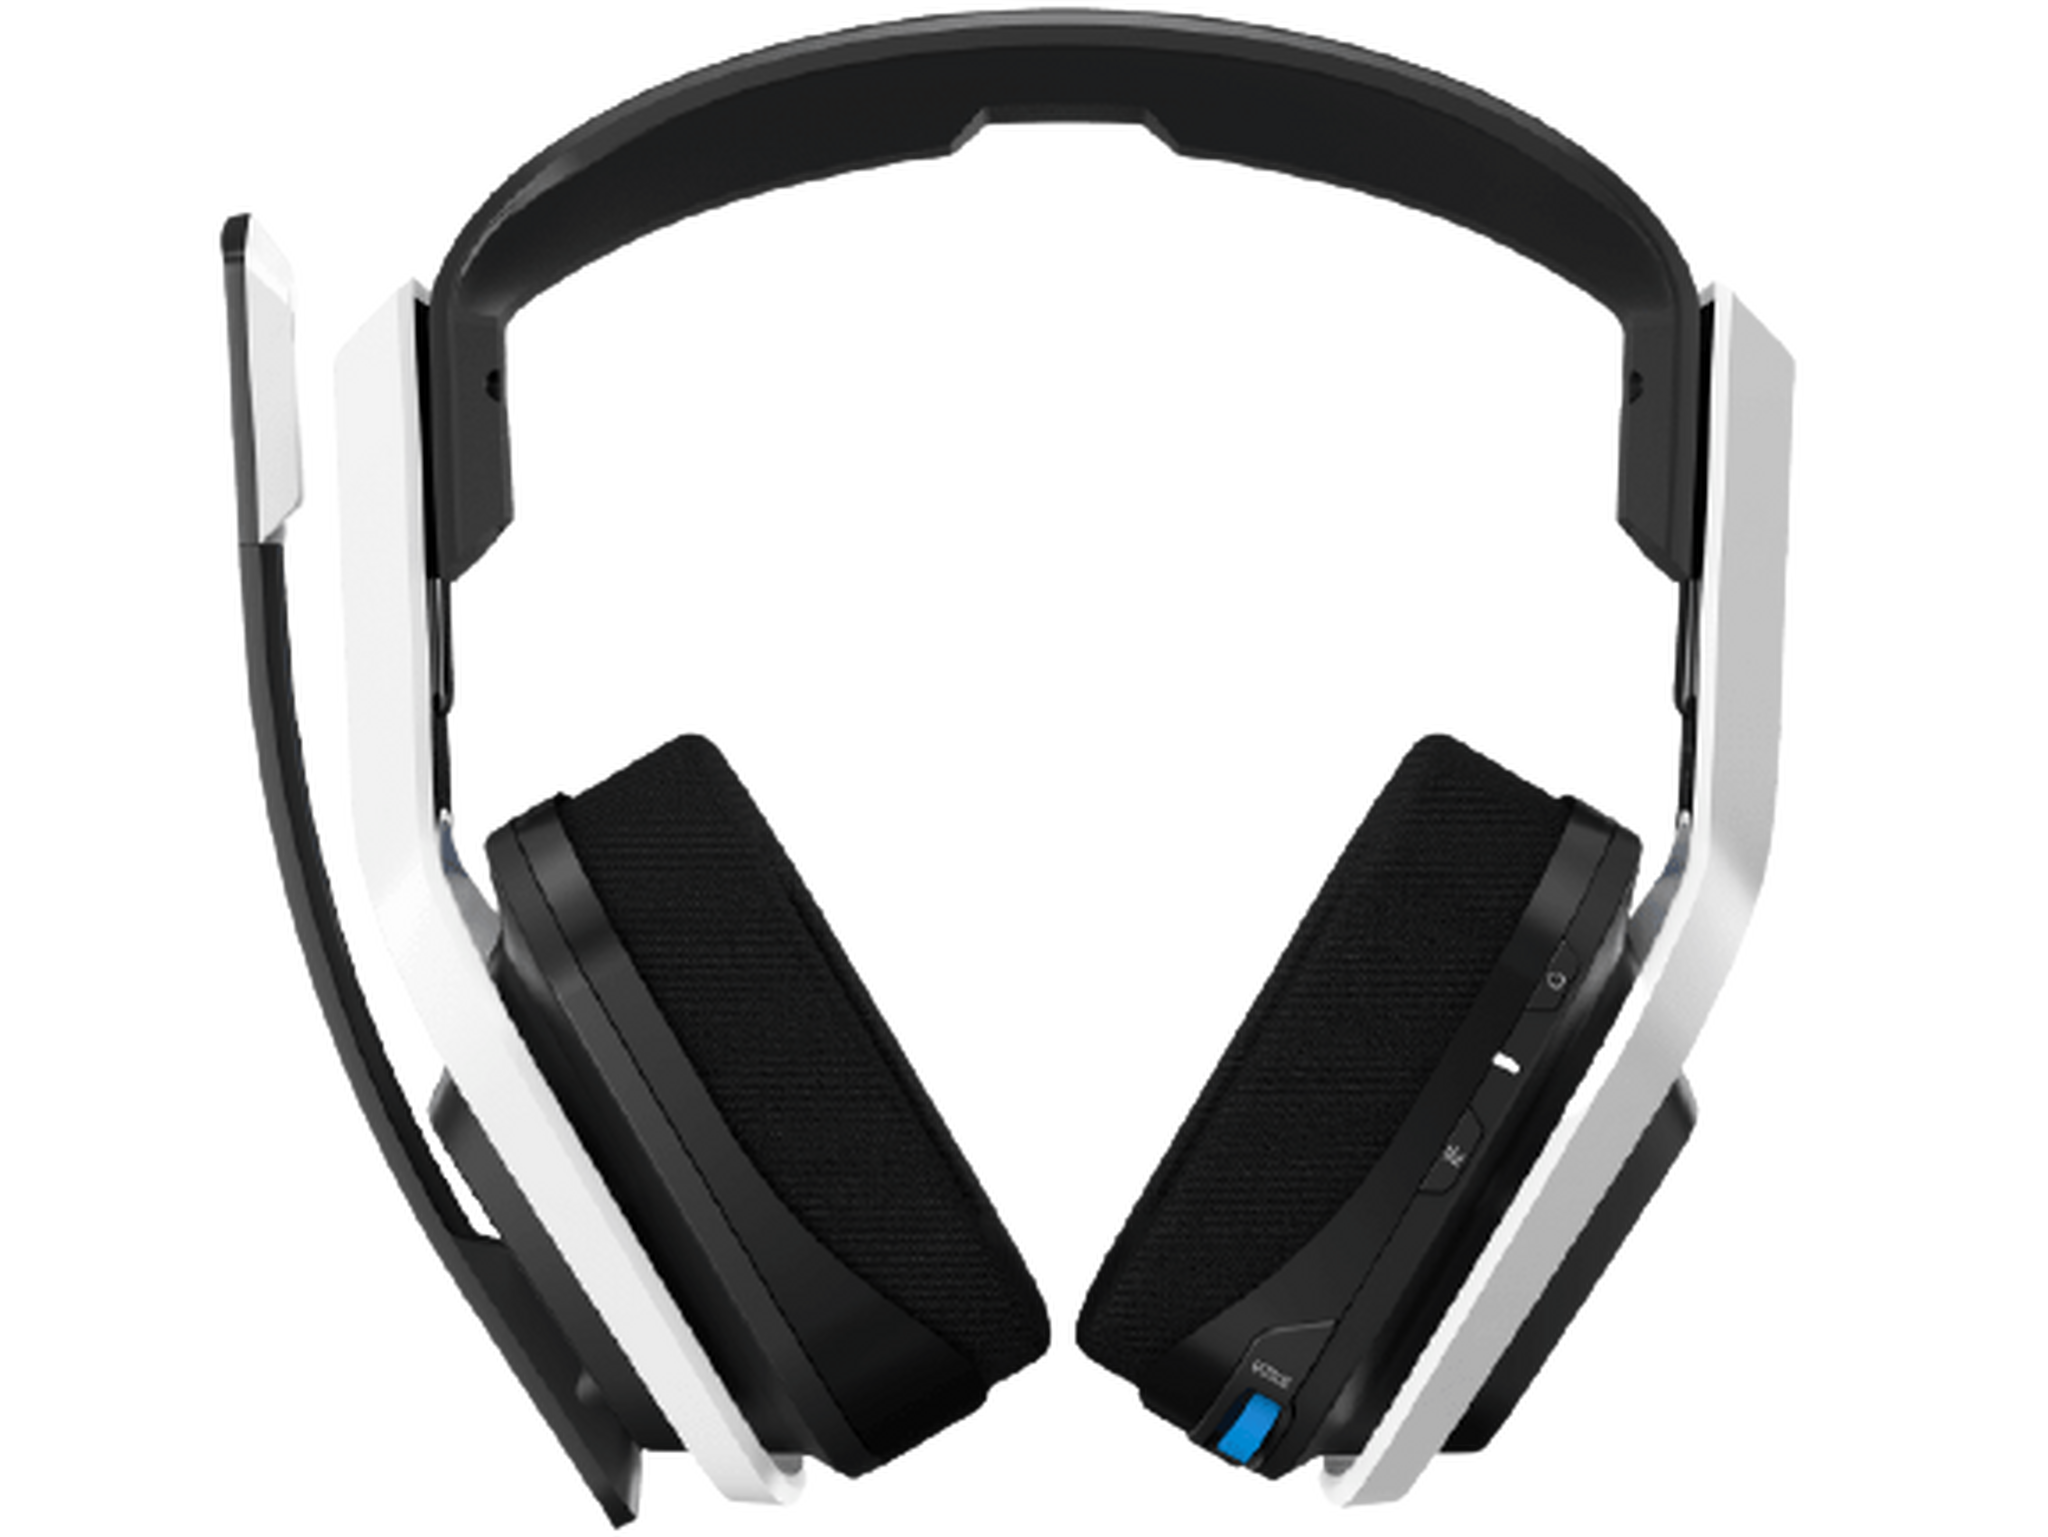 Astro A20 Gen 2 PlayStation Wireless Headset